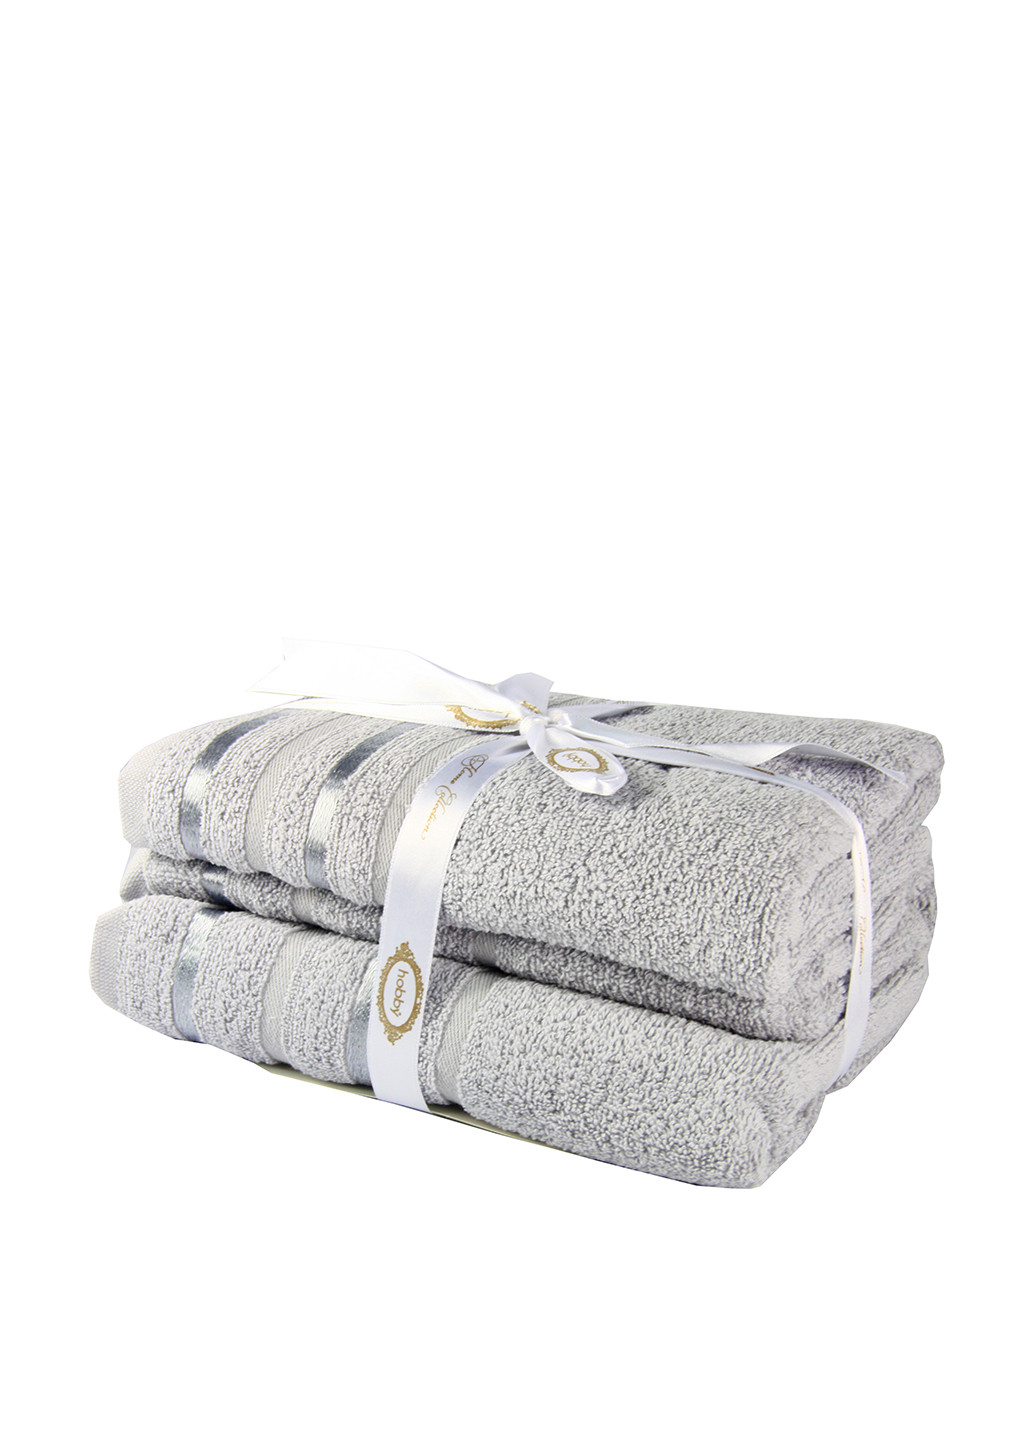 Hobby полотенце, 100х150 см полоска светло-серый производство - Турция